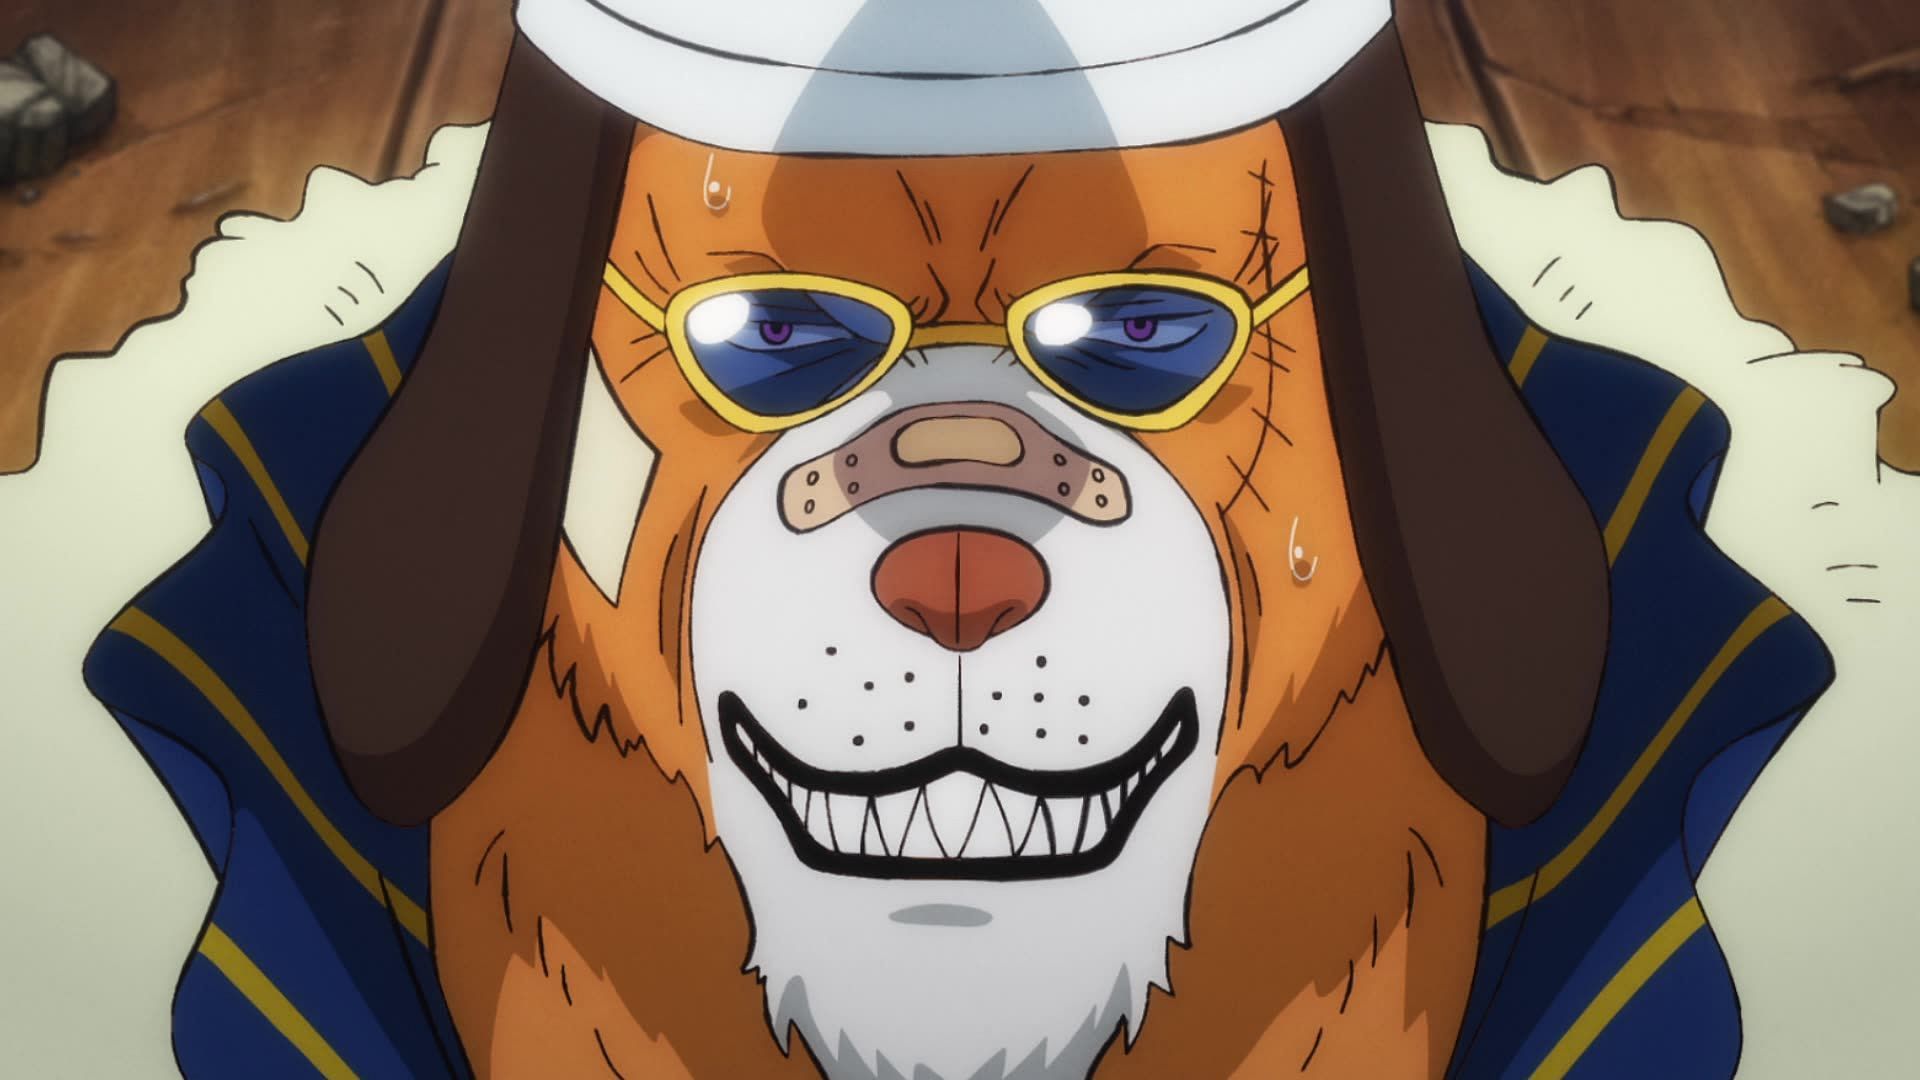 Dogstorm is preparing for another difficult battle in One Piece Episode 1025 (Image via Eiichiro Oda/Shueisha, Viz Media, One Piece)